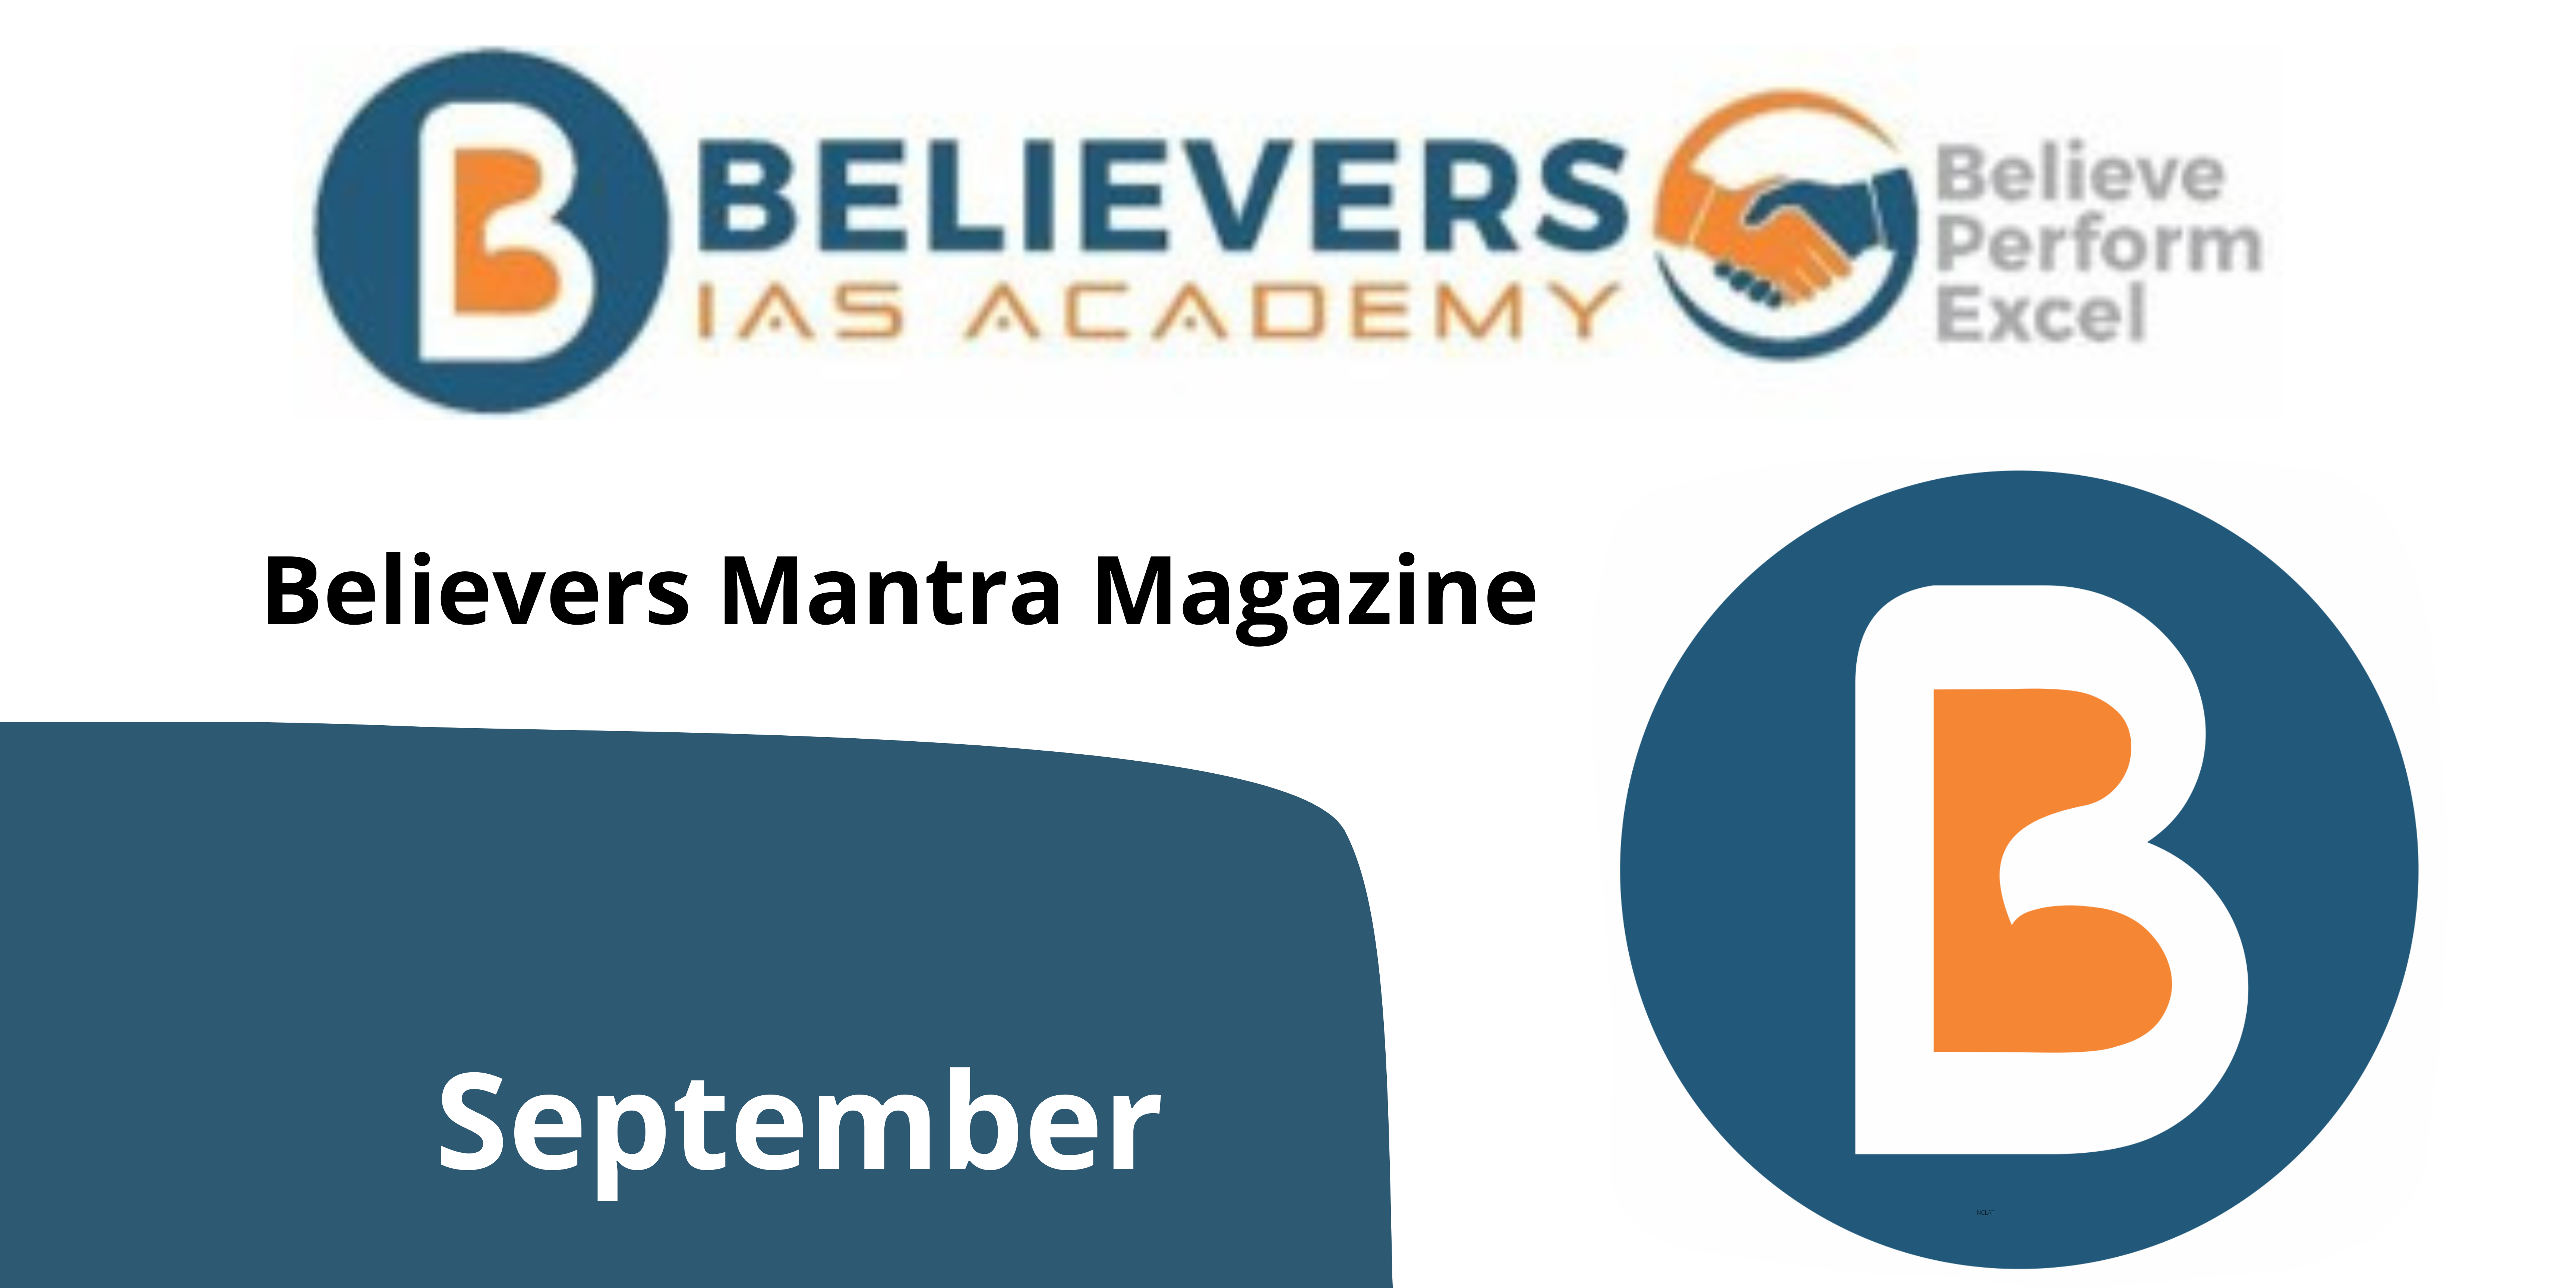 Believers Mantra Magazine - September